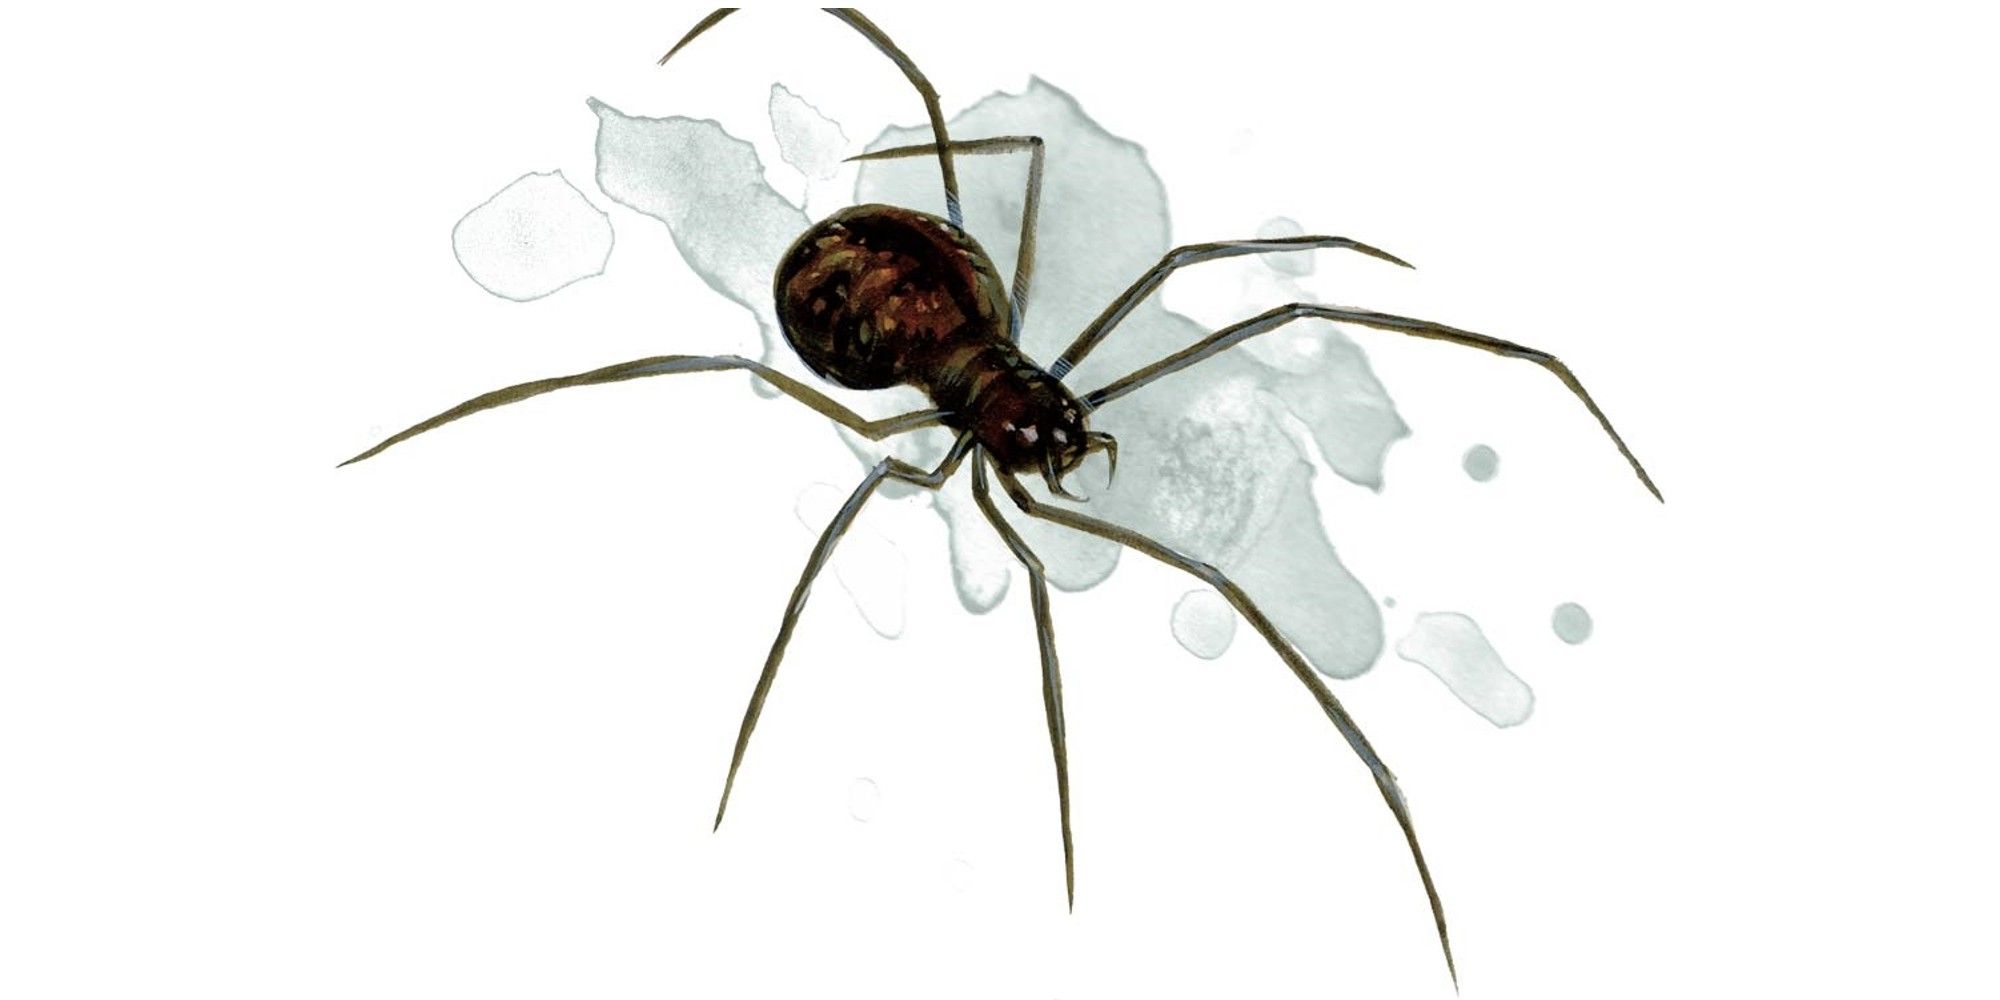 A typical D&D spider.